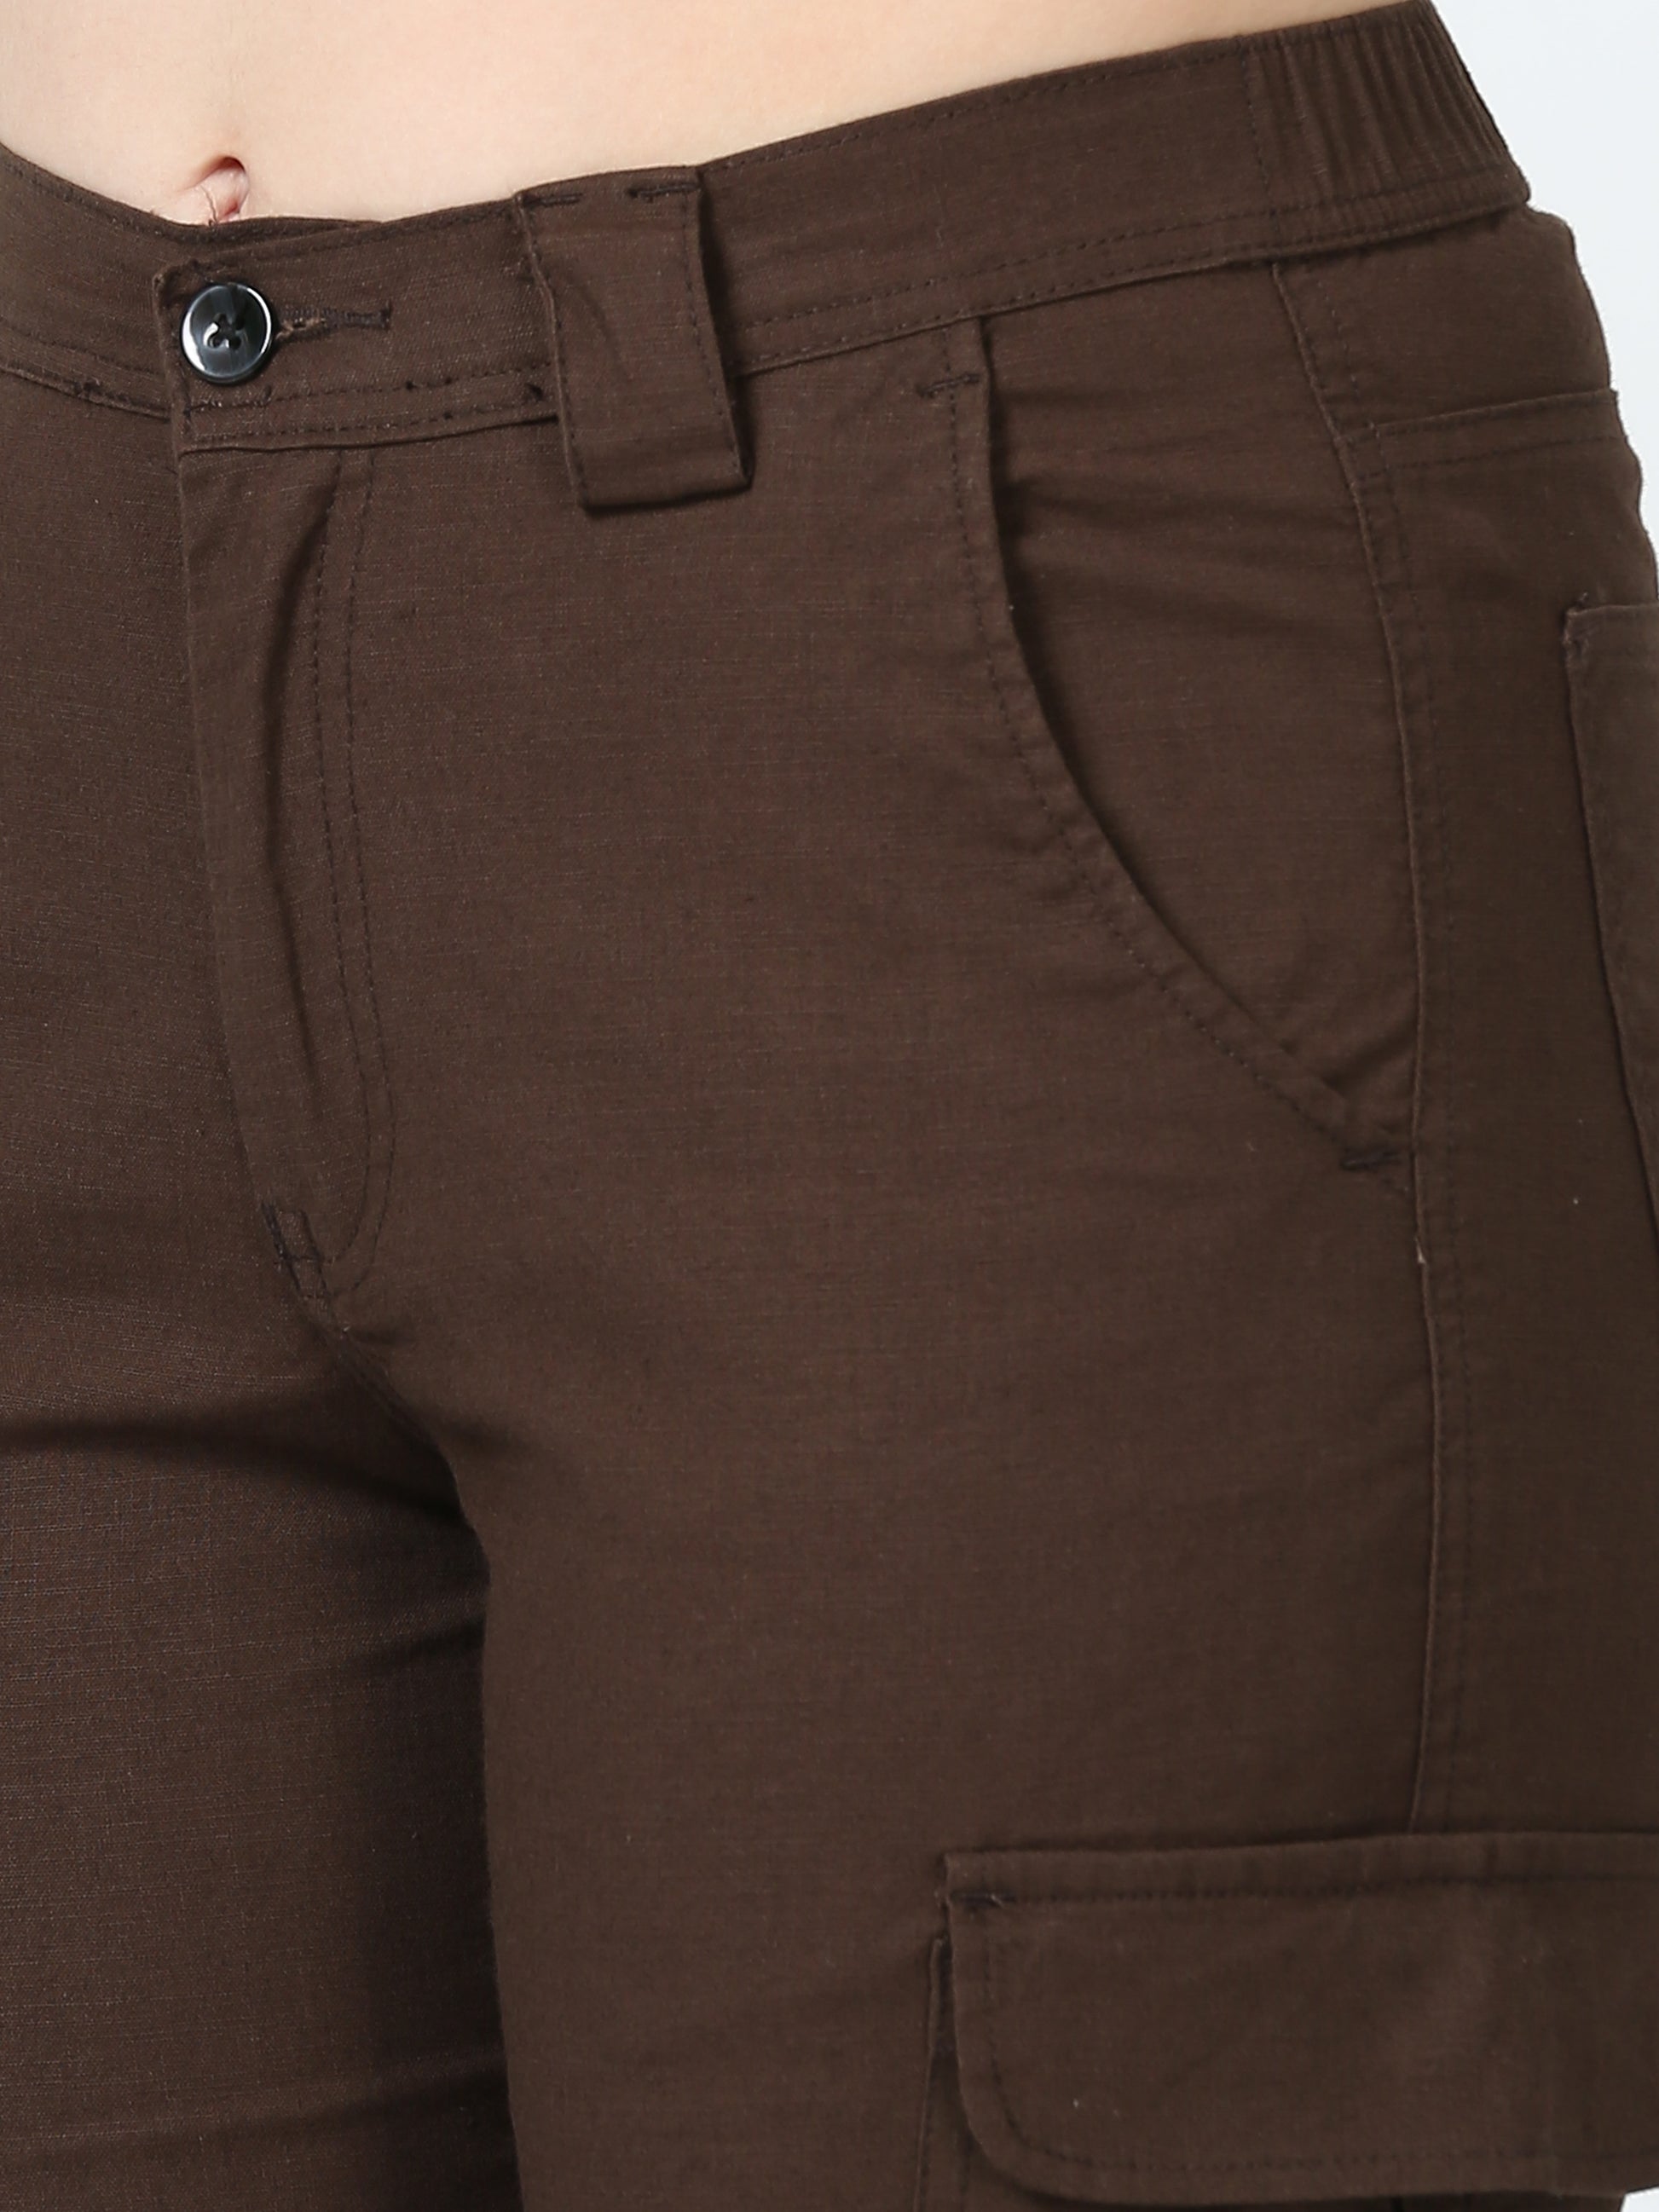 Brown Cargo Pants Womens